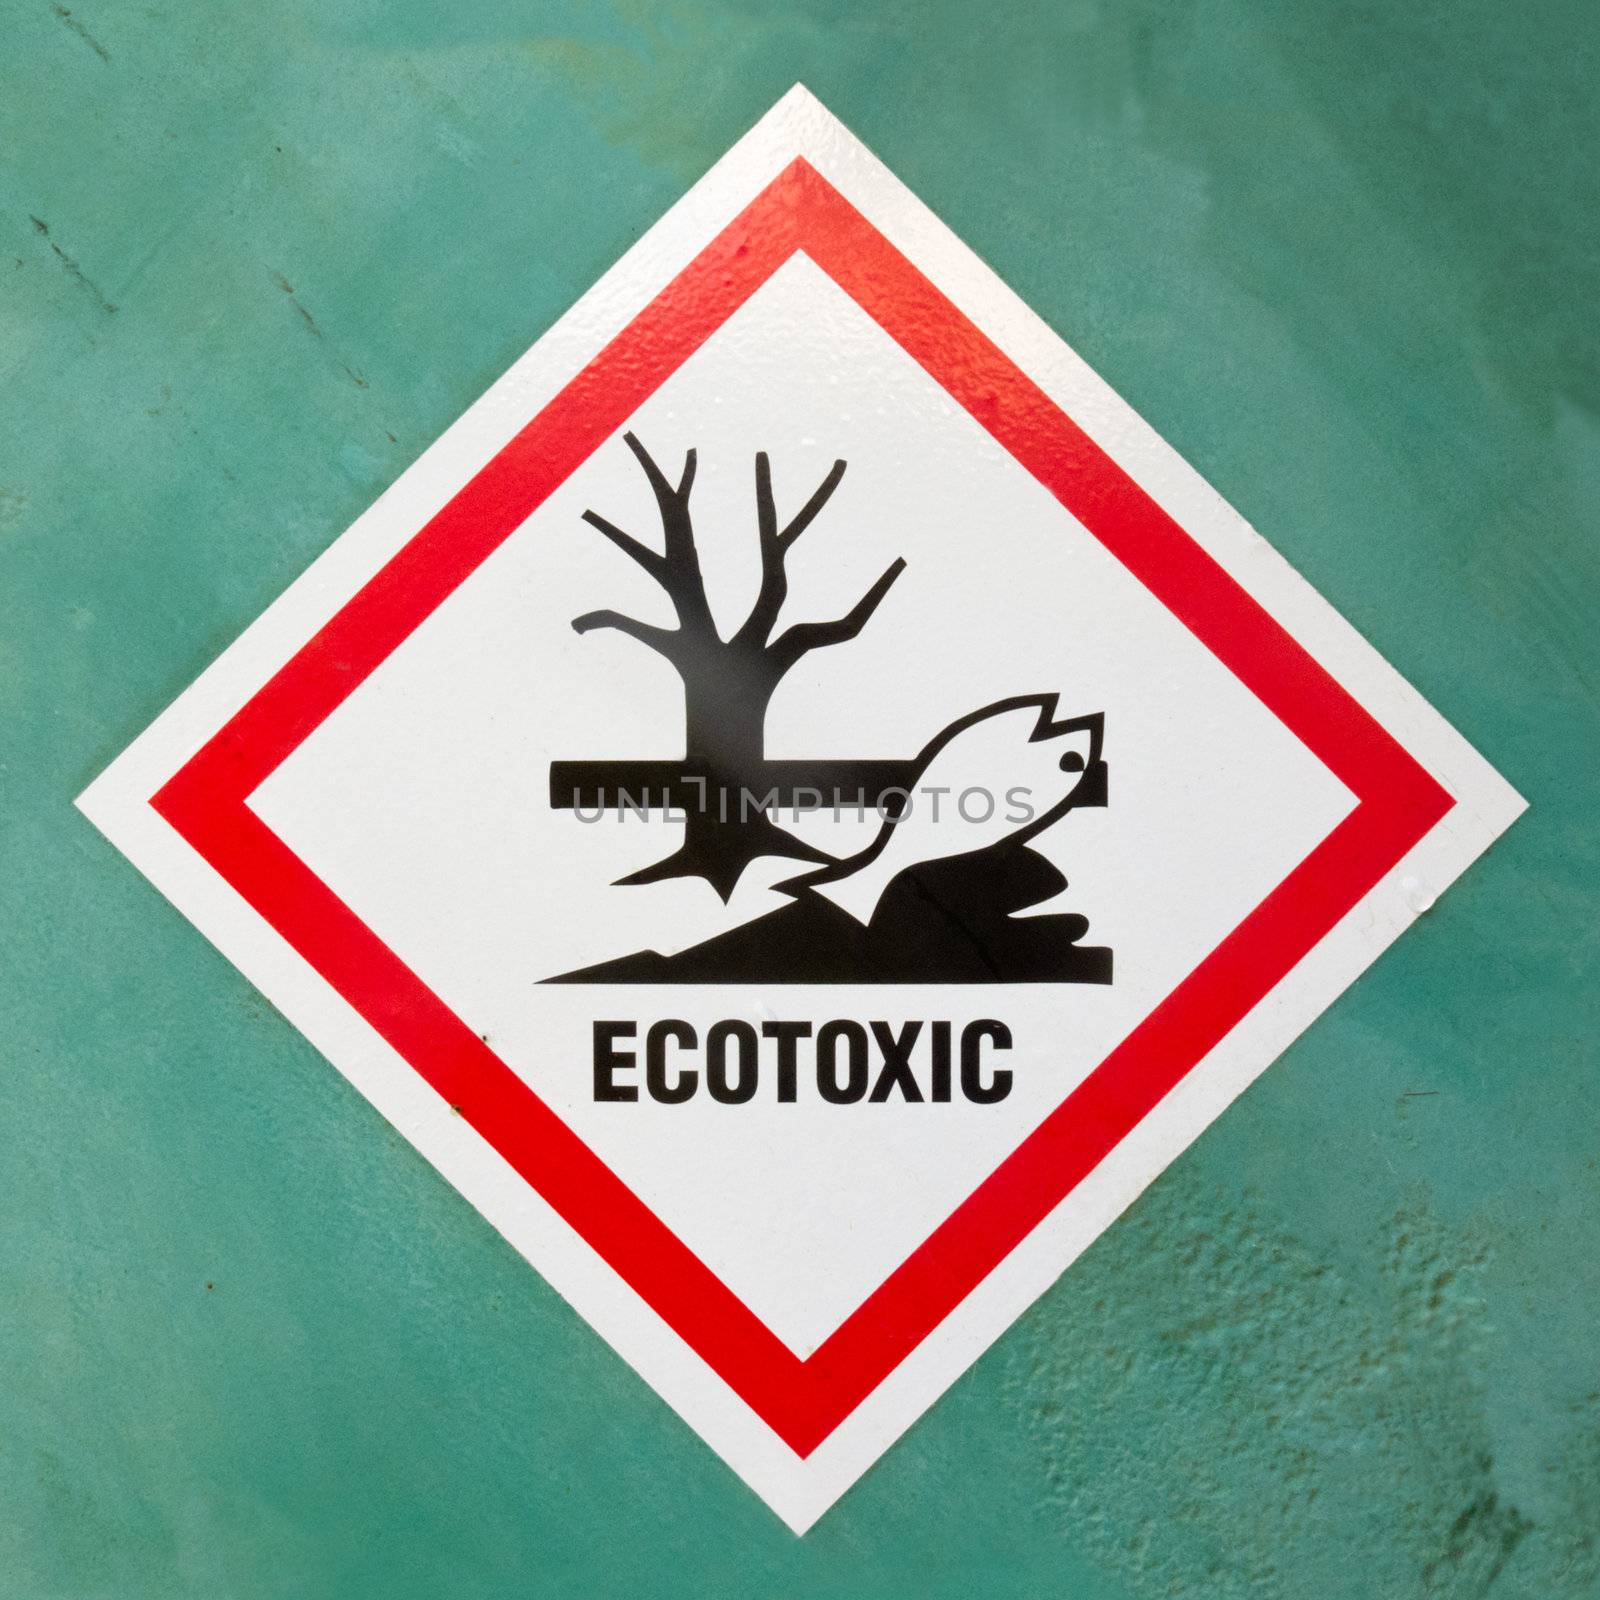 Ecotoxic hazard symbol warning sign by PiLens